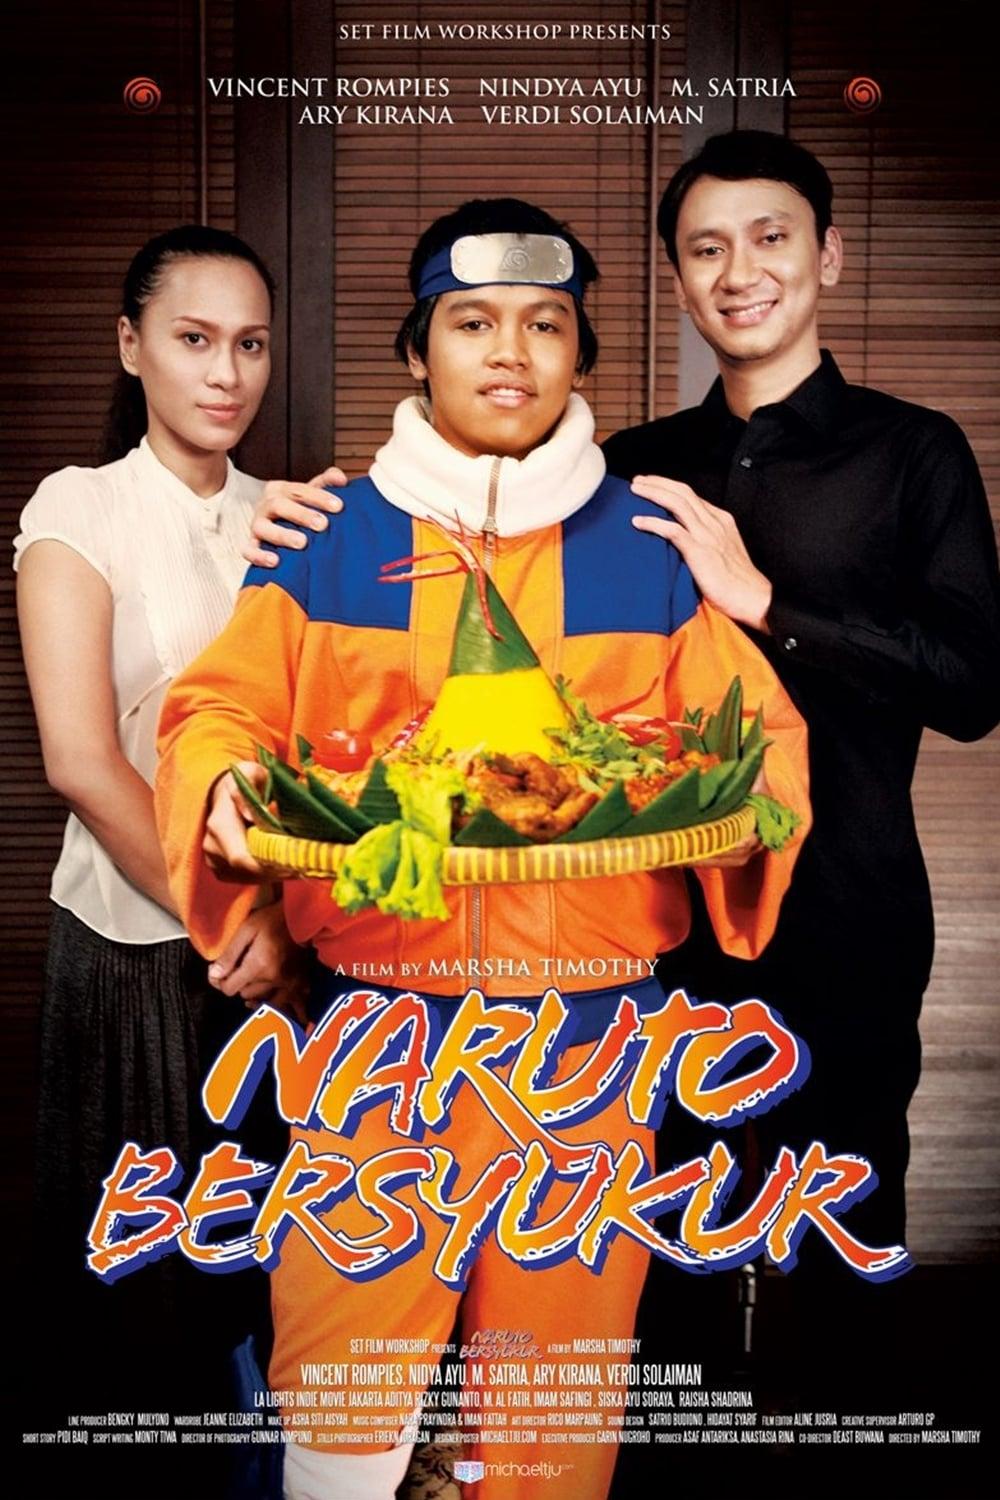 Naruto Bersyukur poster